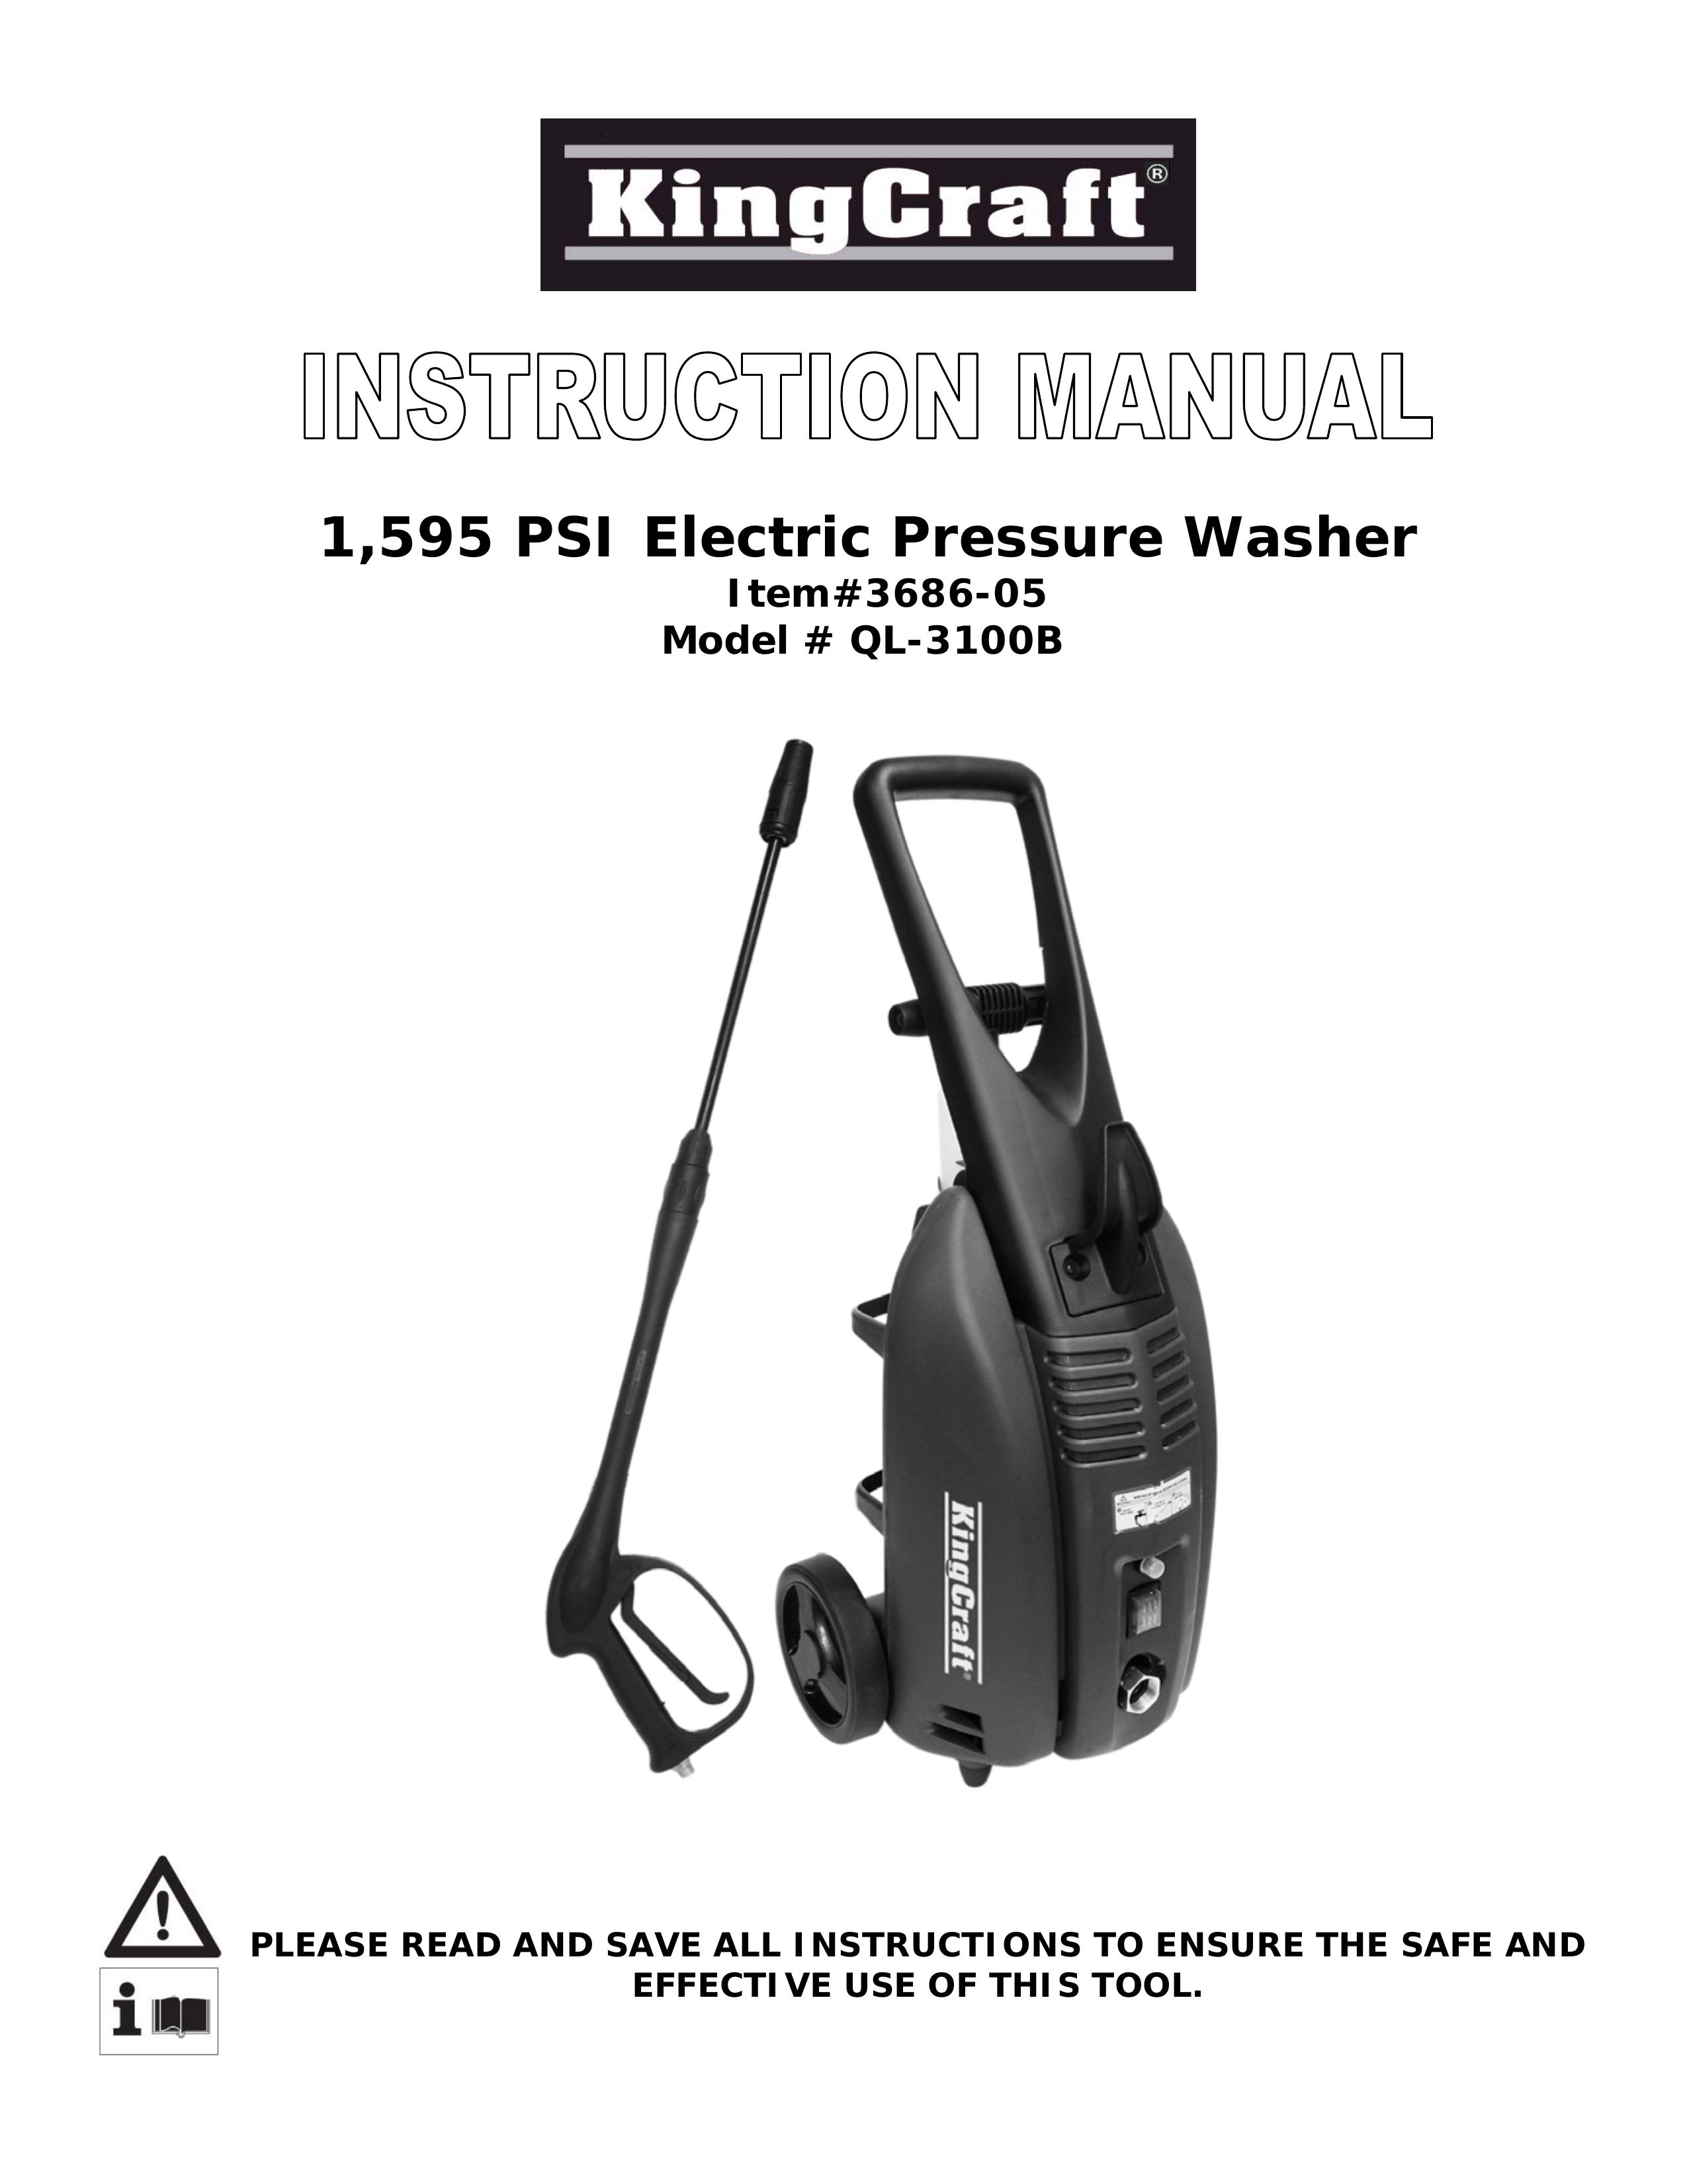 Wachsmuth & Krogmann QL-3100B Pressure Washer User Manual